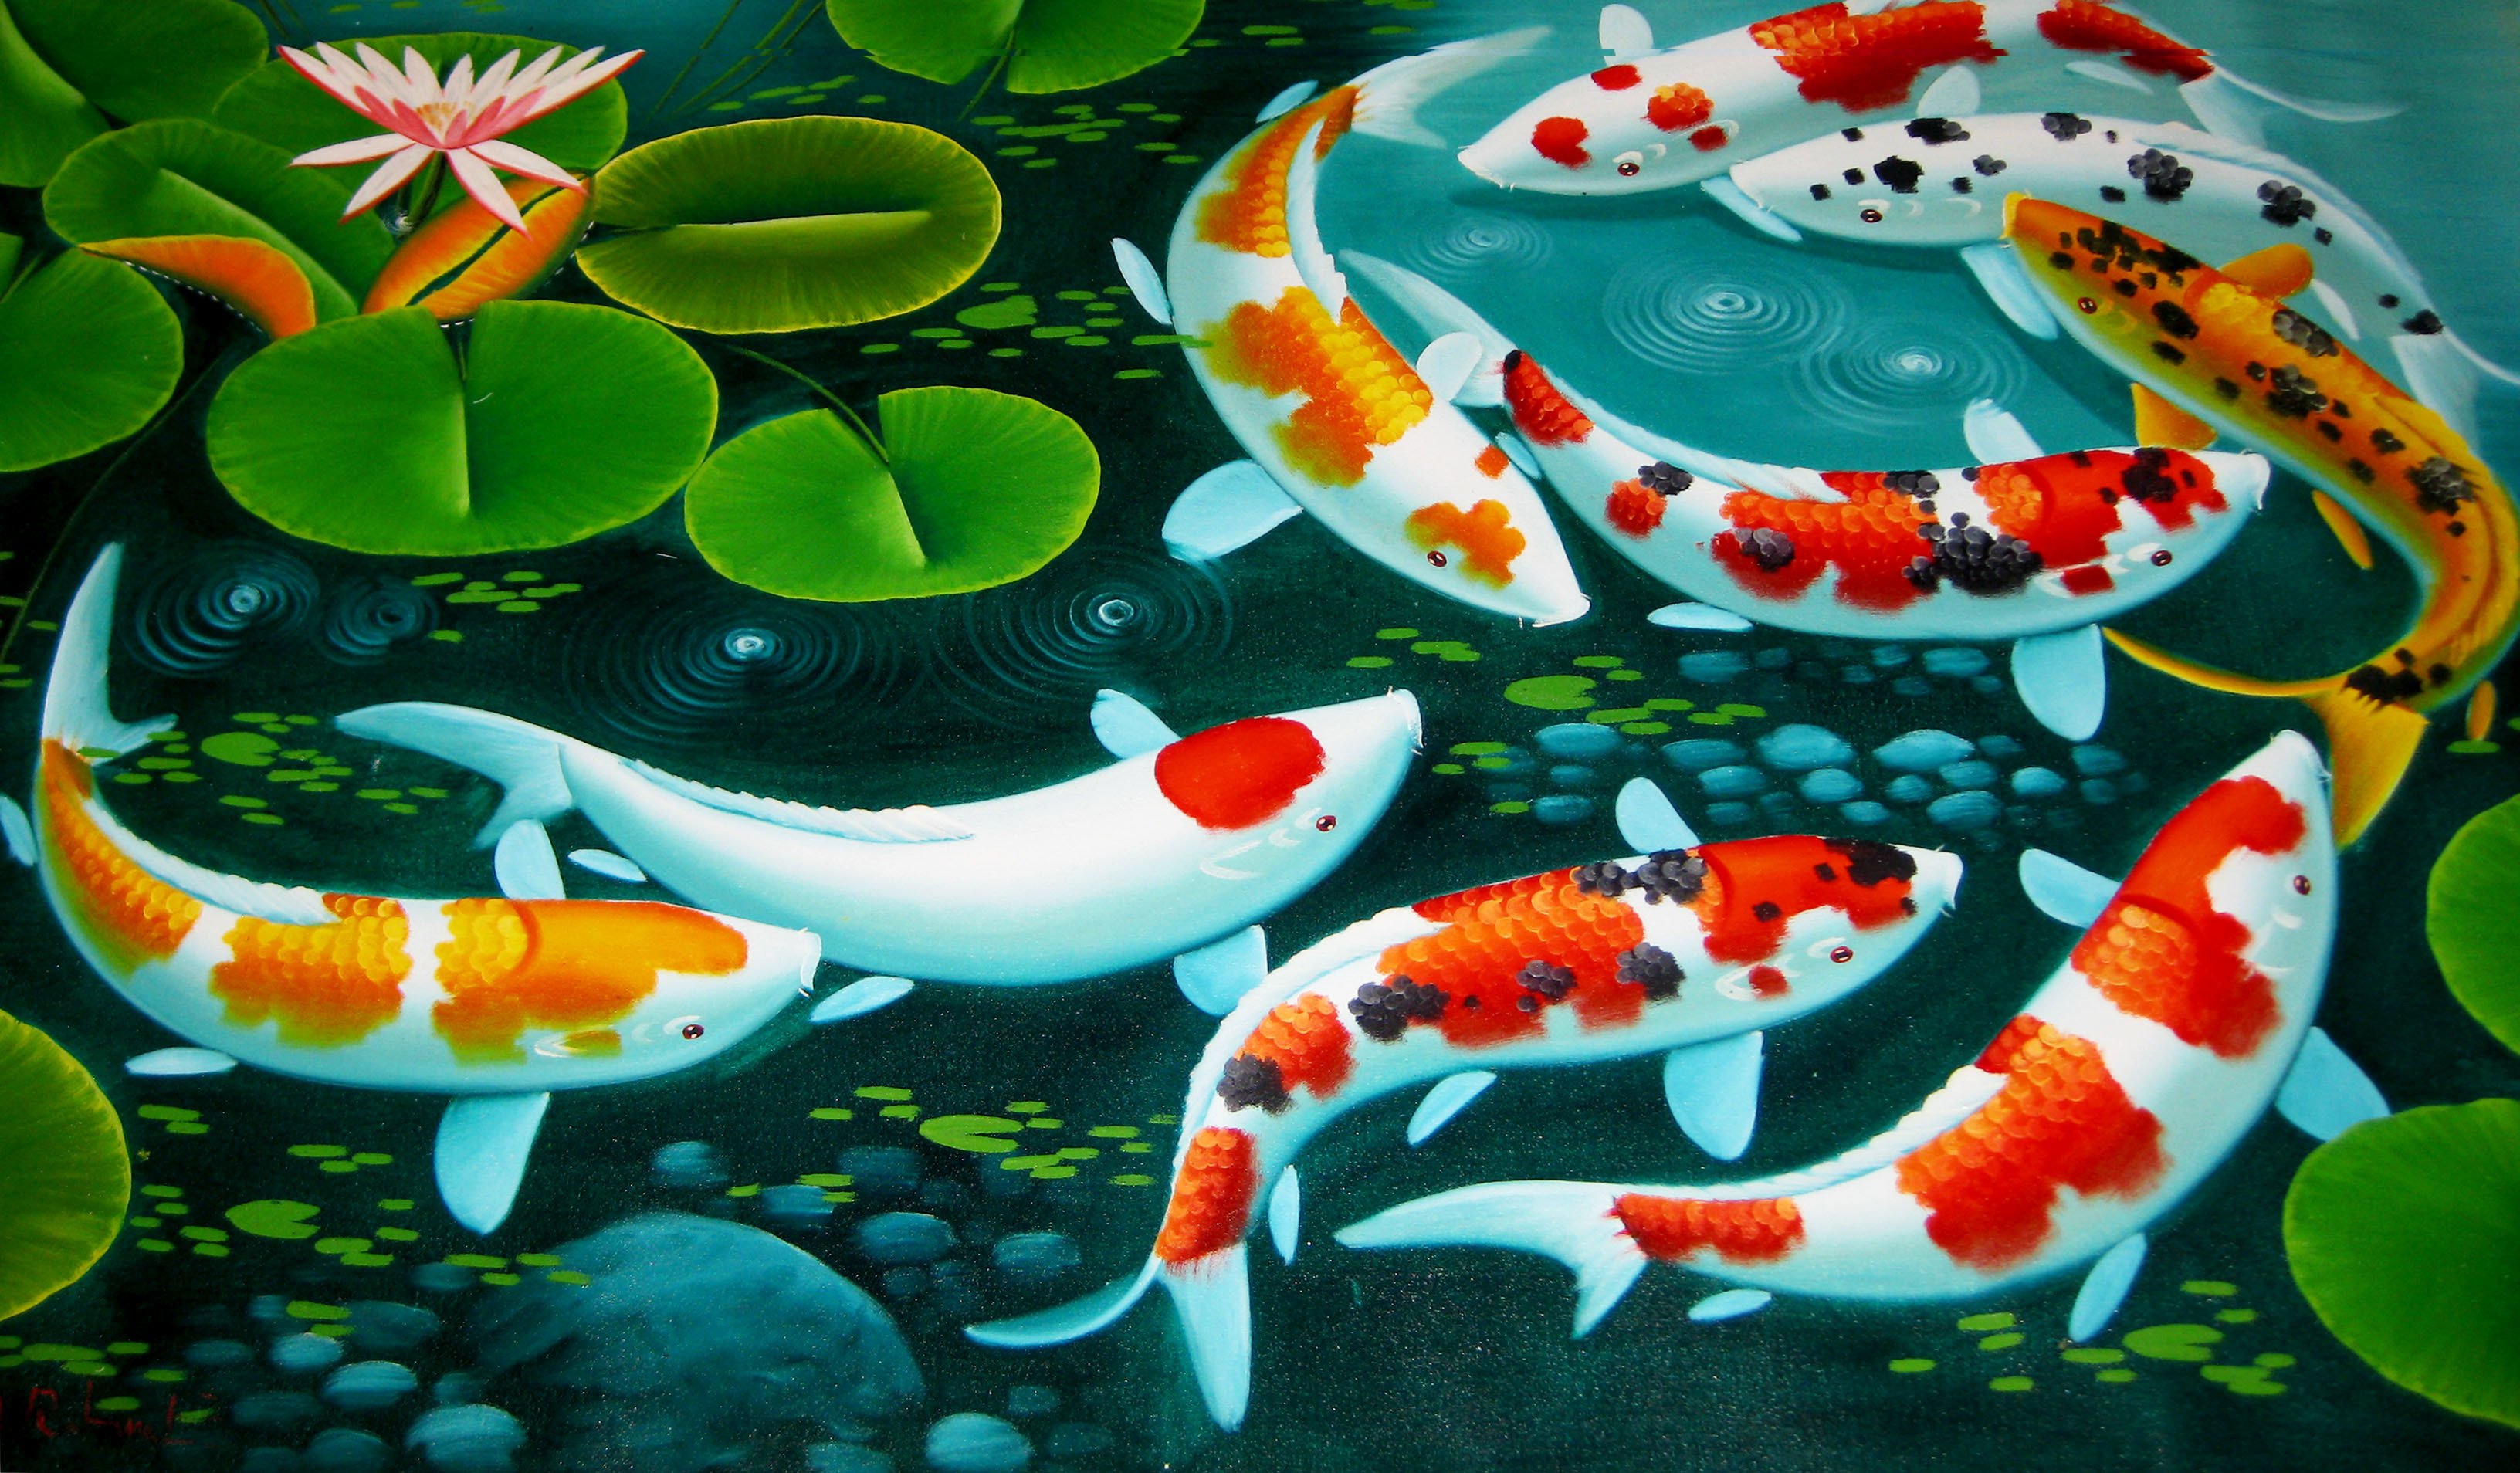 Hd koi fish wallpaper 54 images for Koi pond screensaver